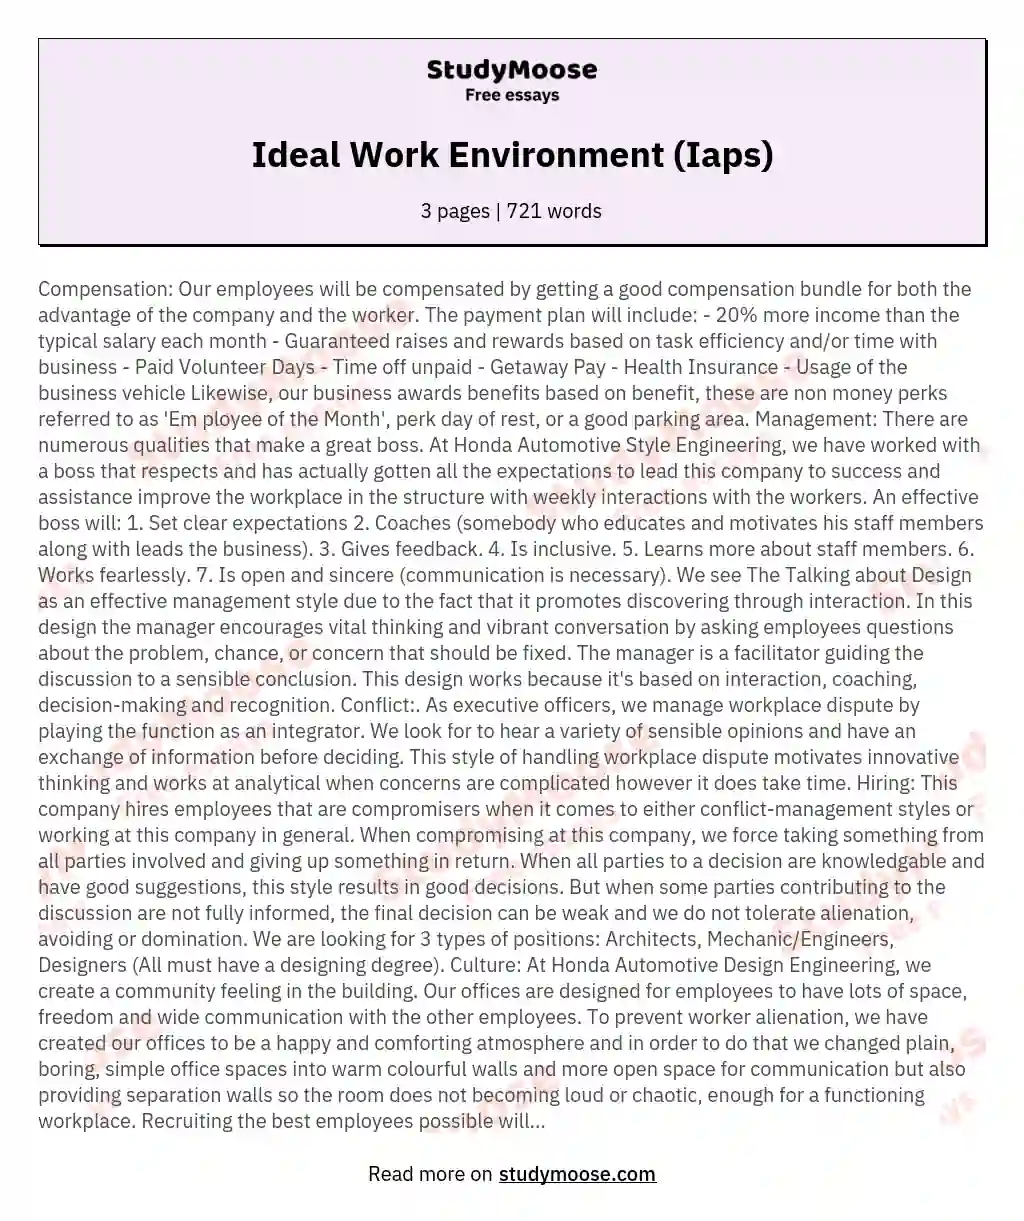 Ideal Work Environment (Iaps) essay